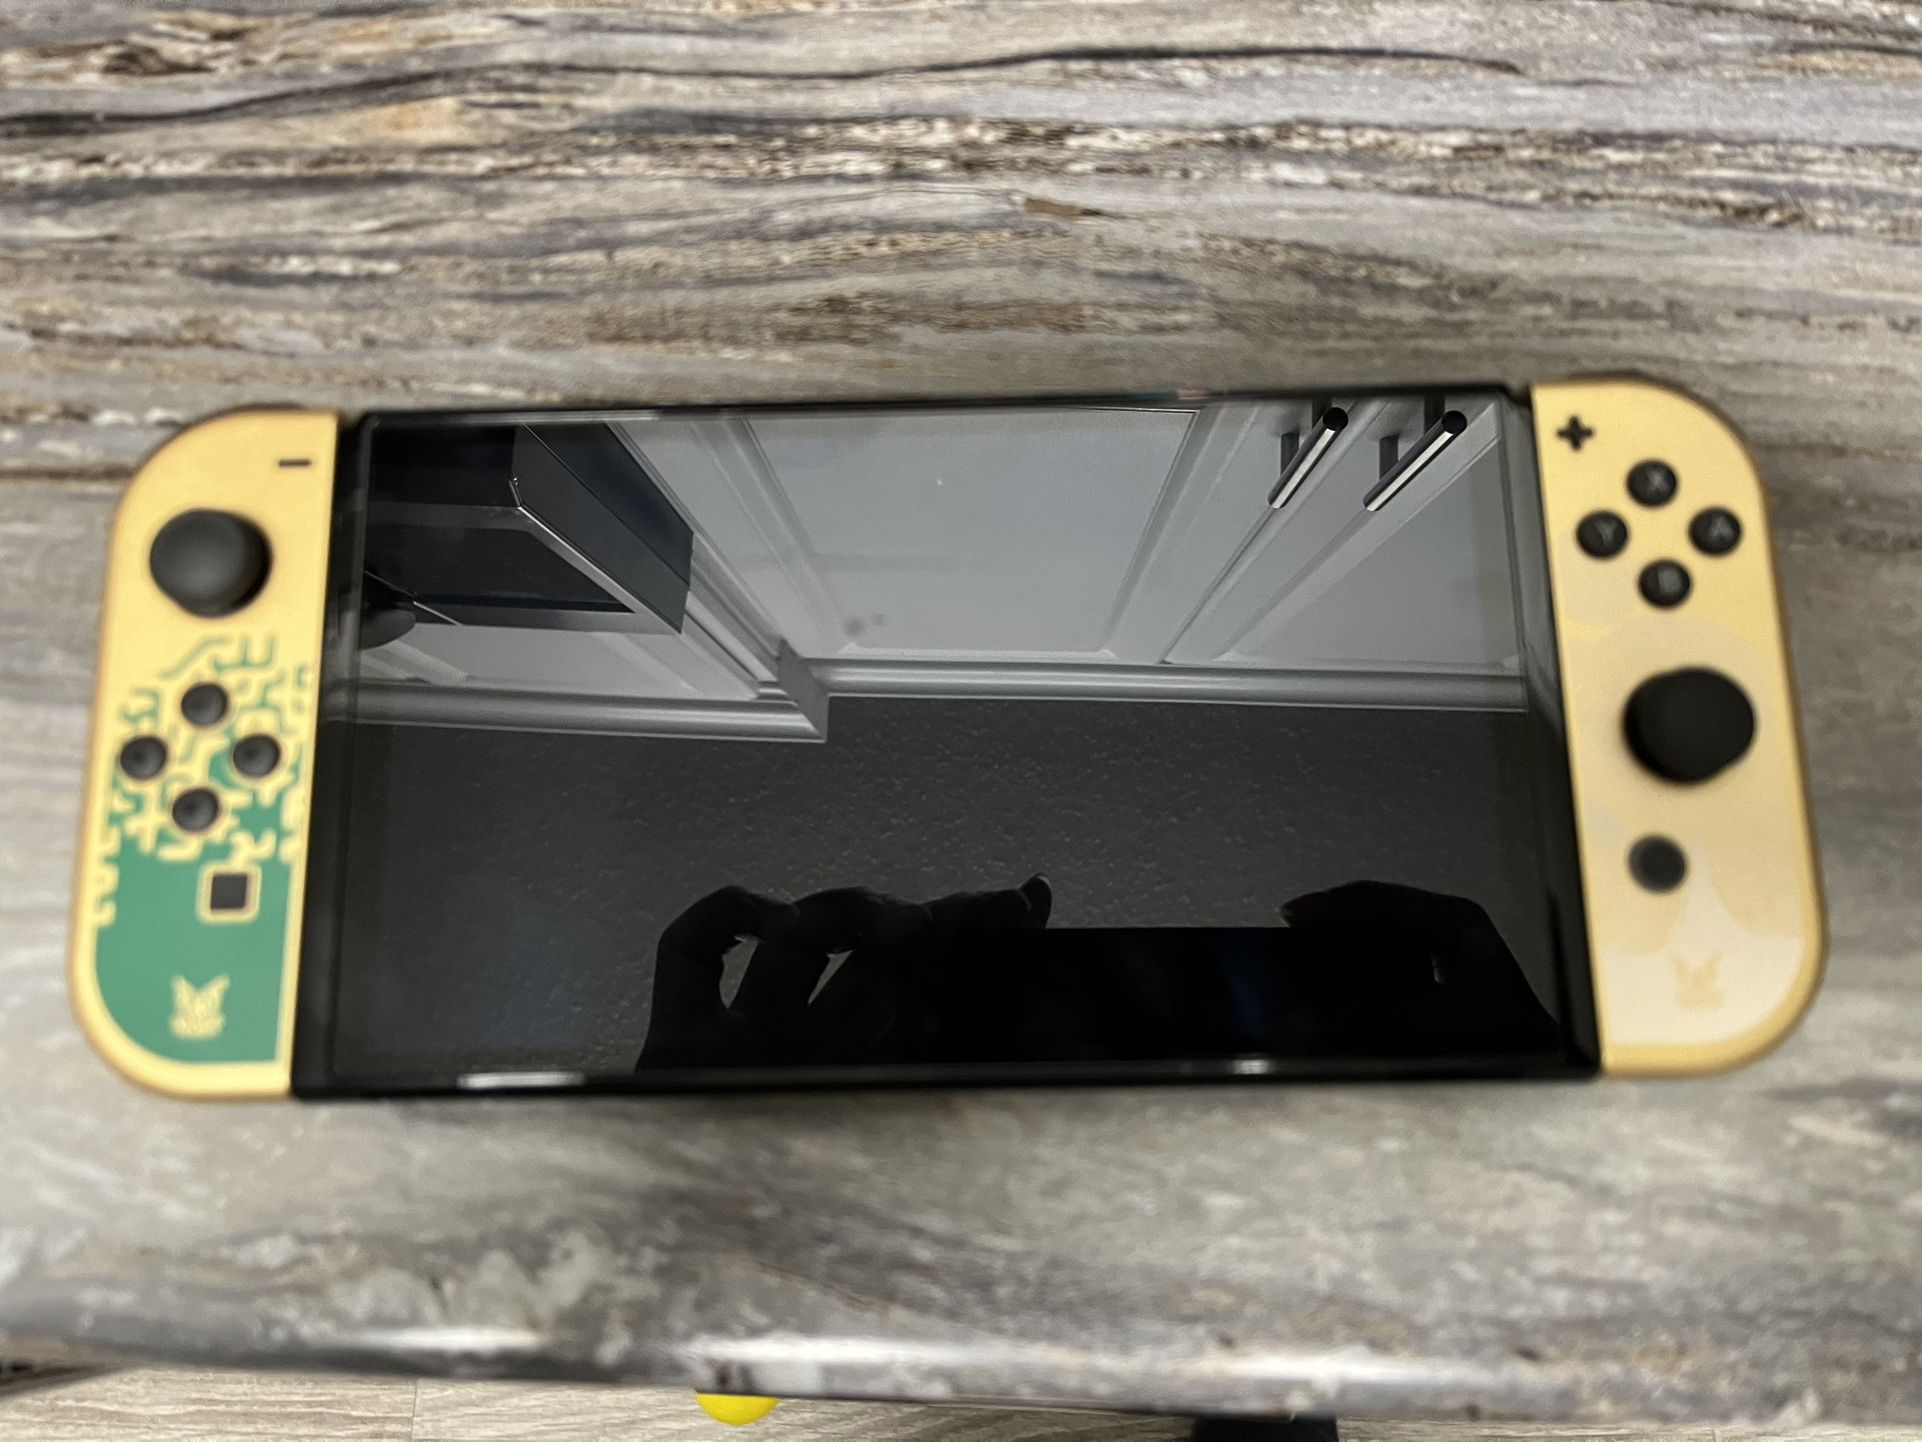 Nintendo OLED Switch Zelda Modeled With 256 Gb SD CARD